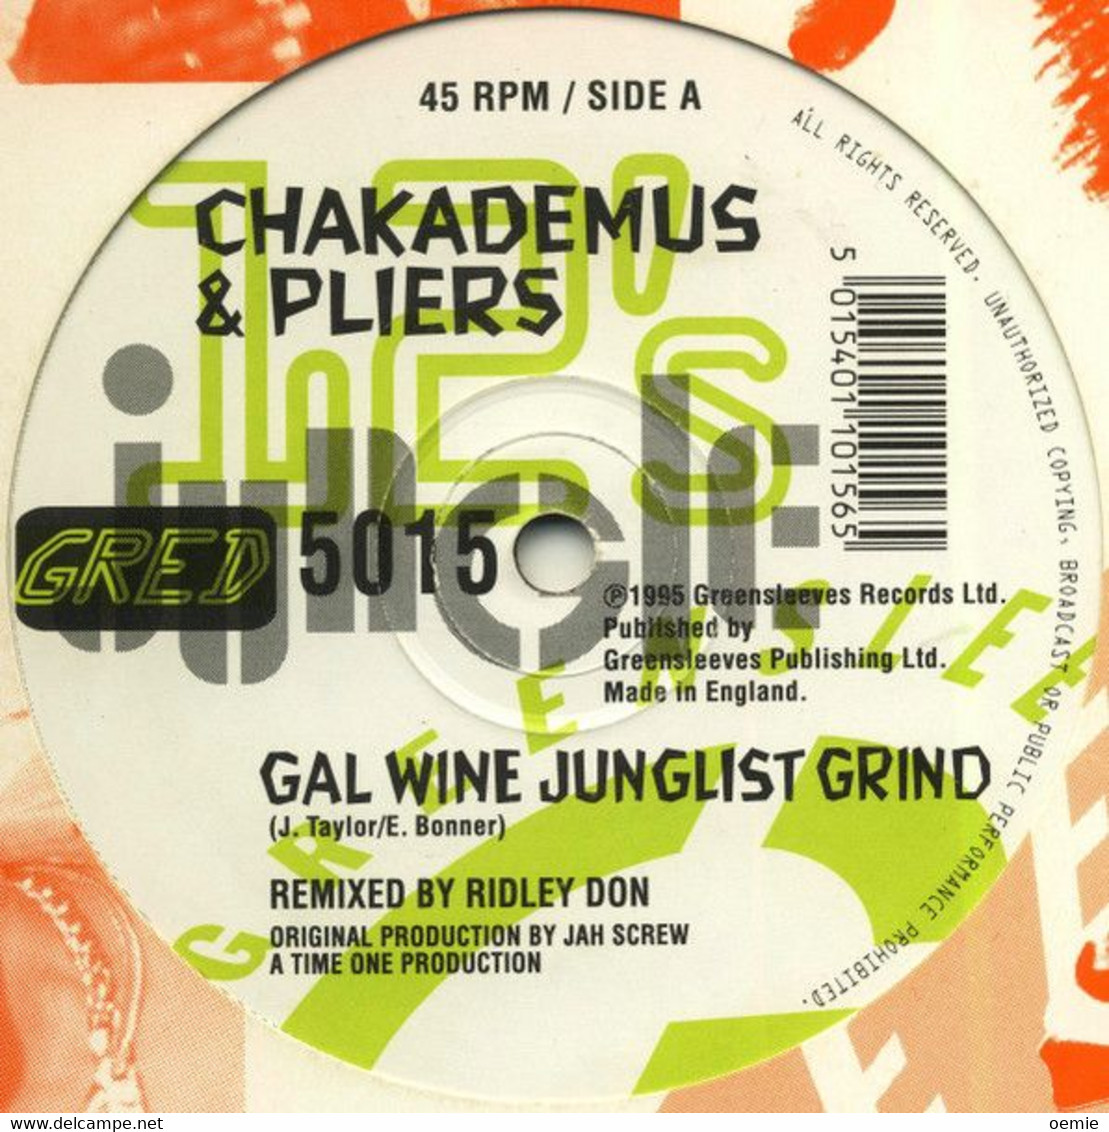 CHAKADEMUS  &  PLIERS  °  GALGRIND DRUM'N'BASS - 45 T - Maxi-Single